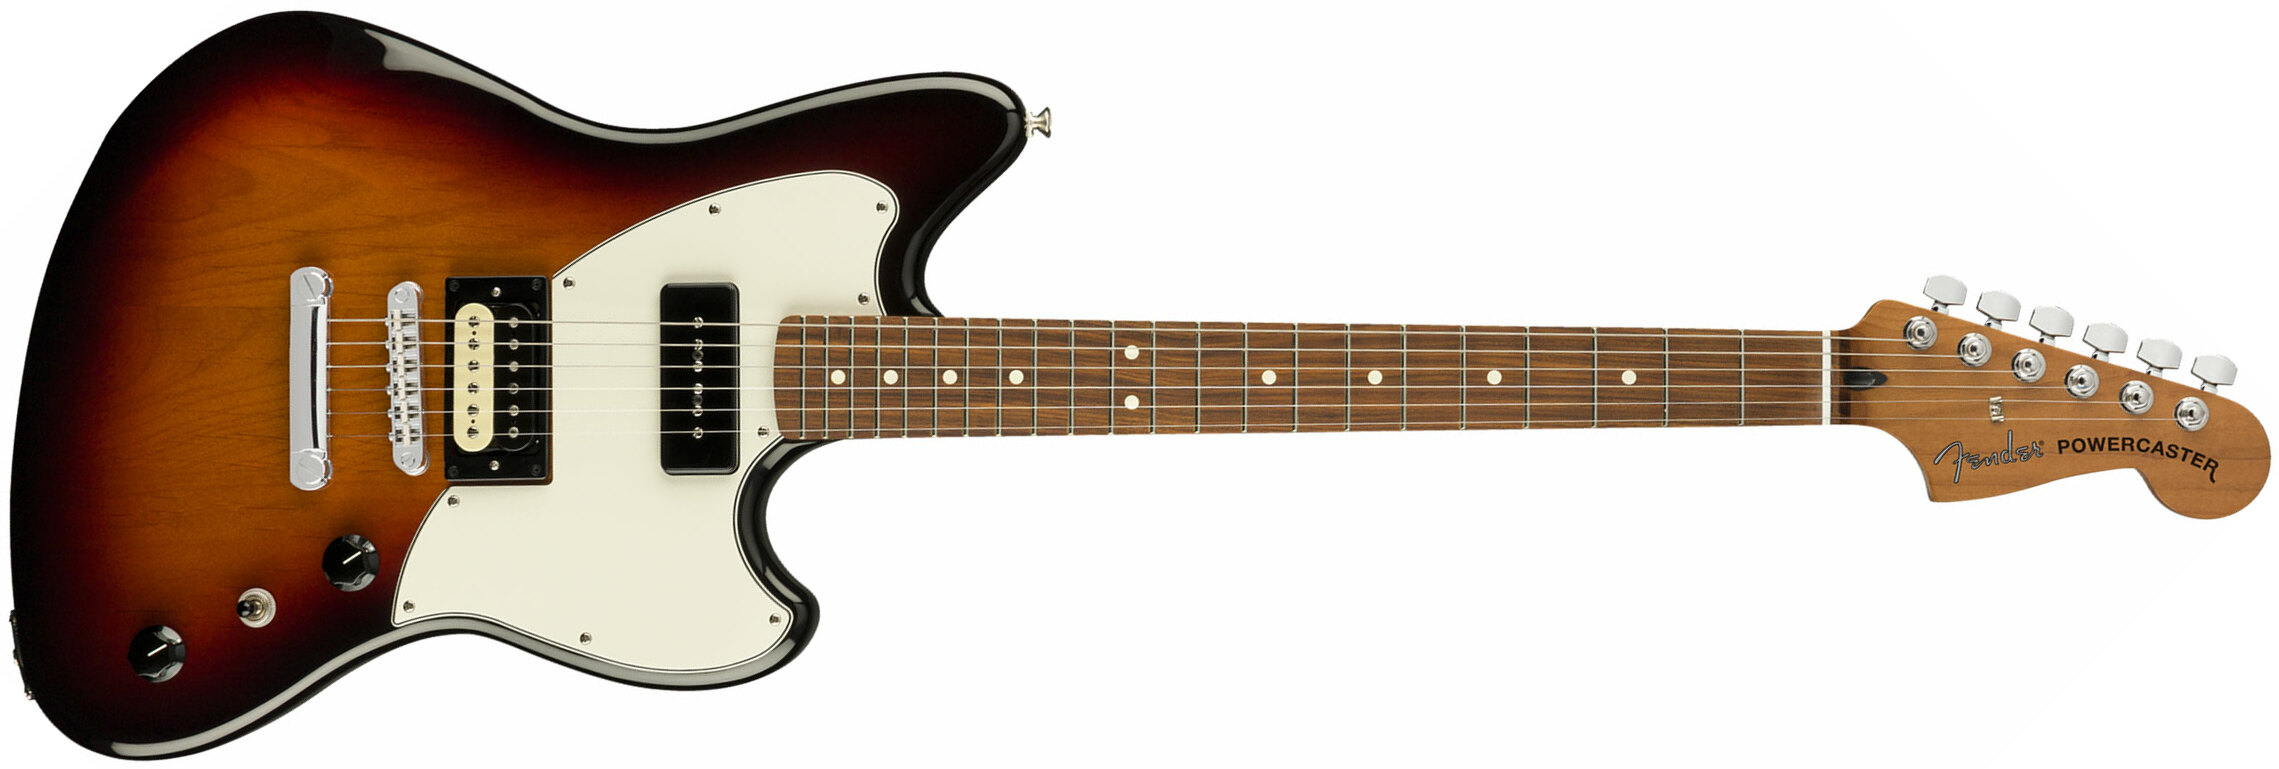 Fender Powercaster Alternate Reality Ltd Hp90 Ht Pf - 3-color Sunburst - Retro rock electric guitar - Main picture